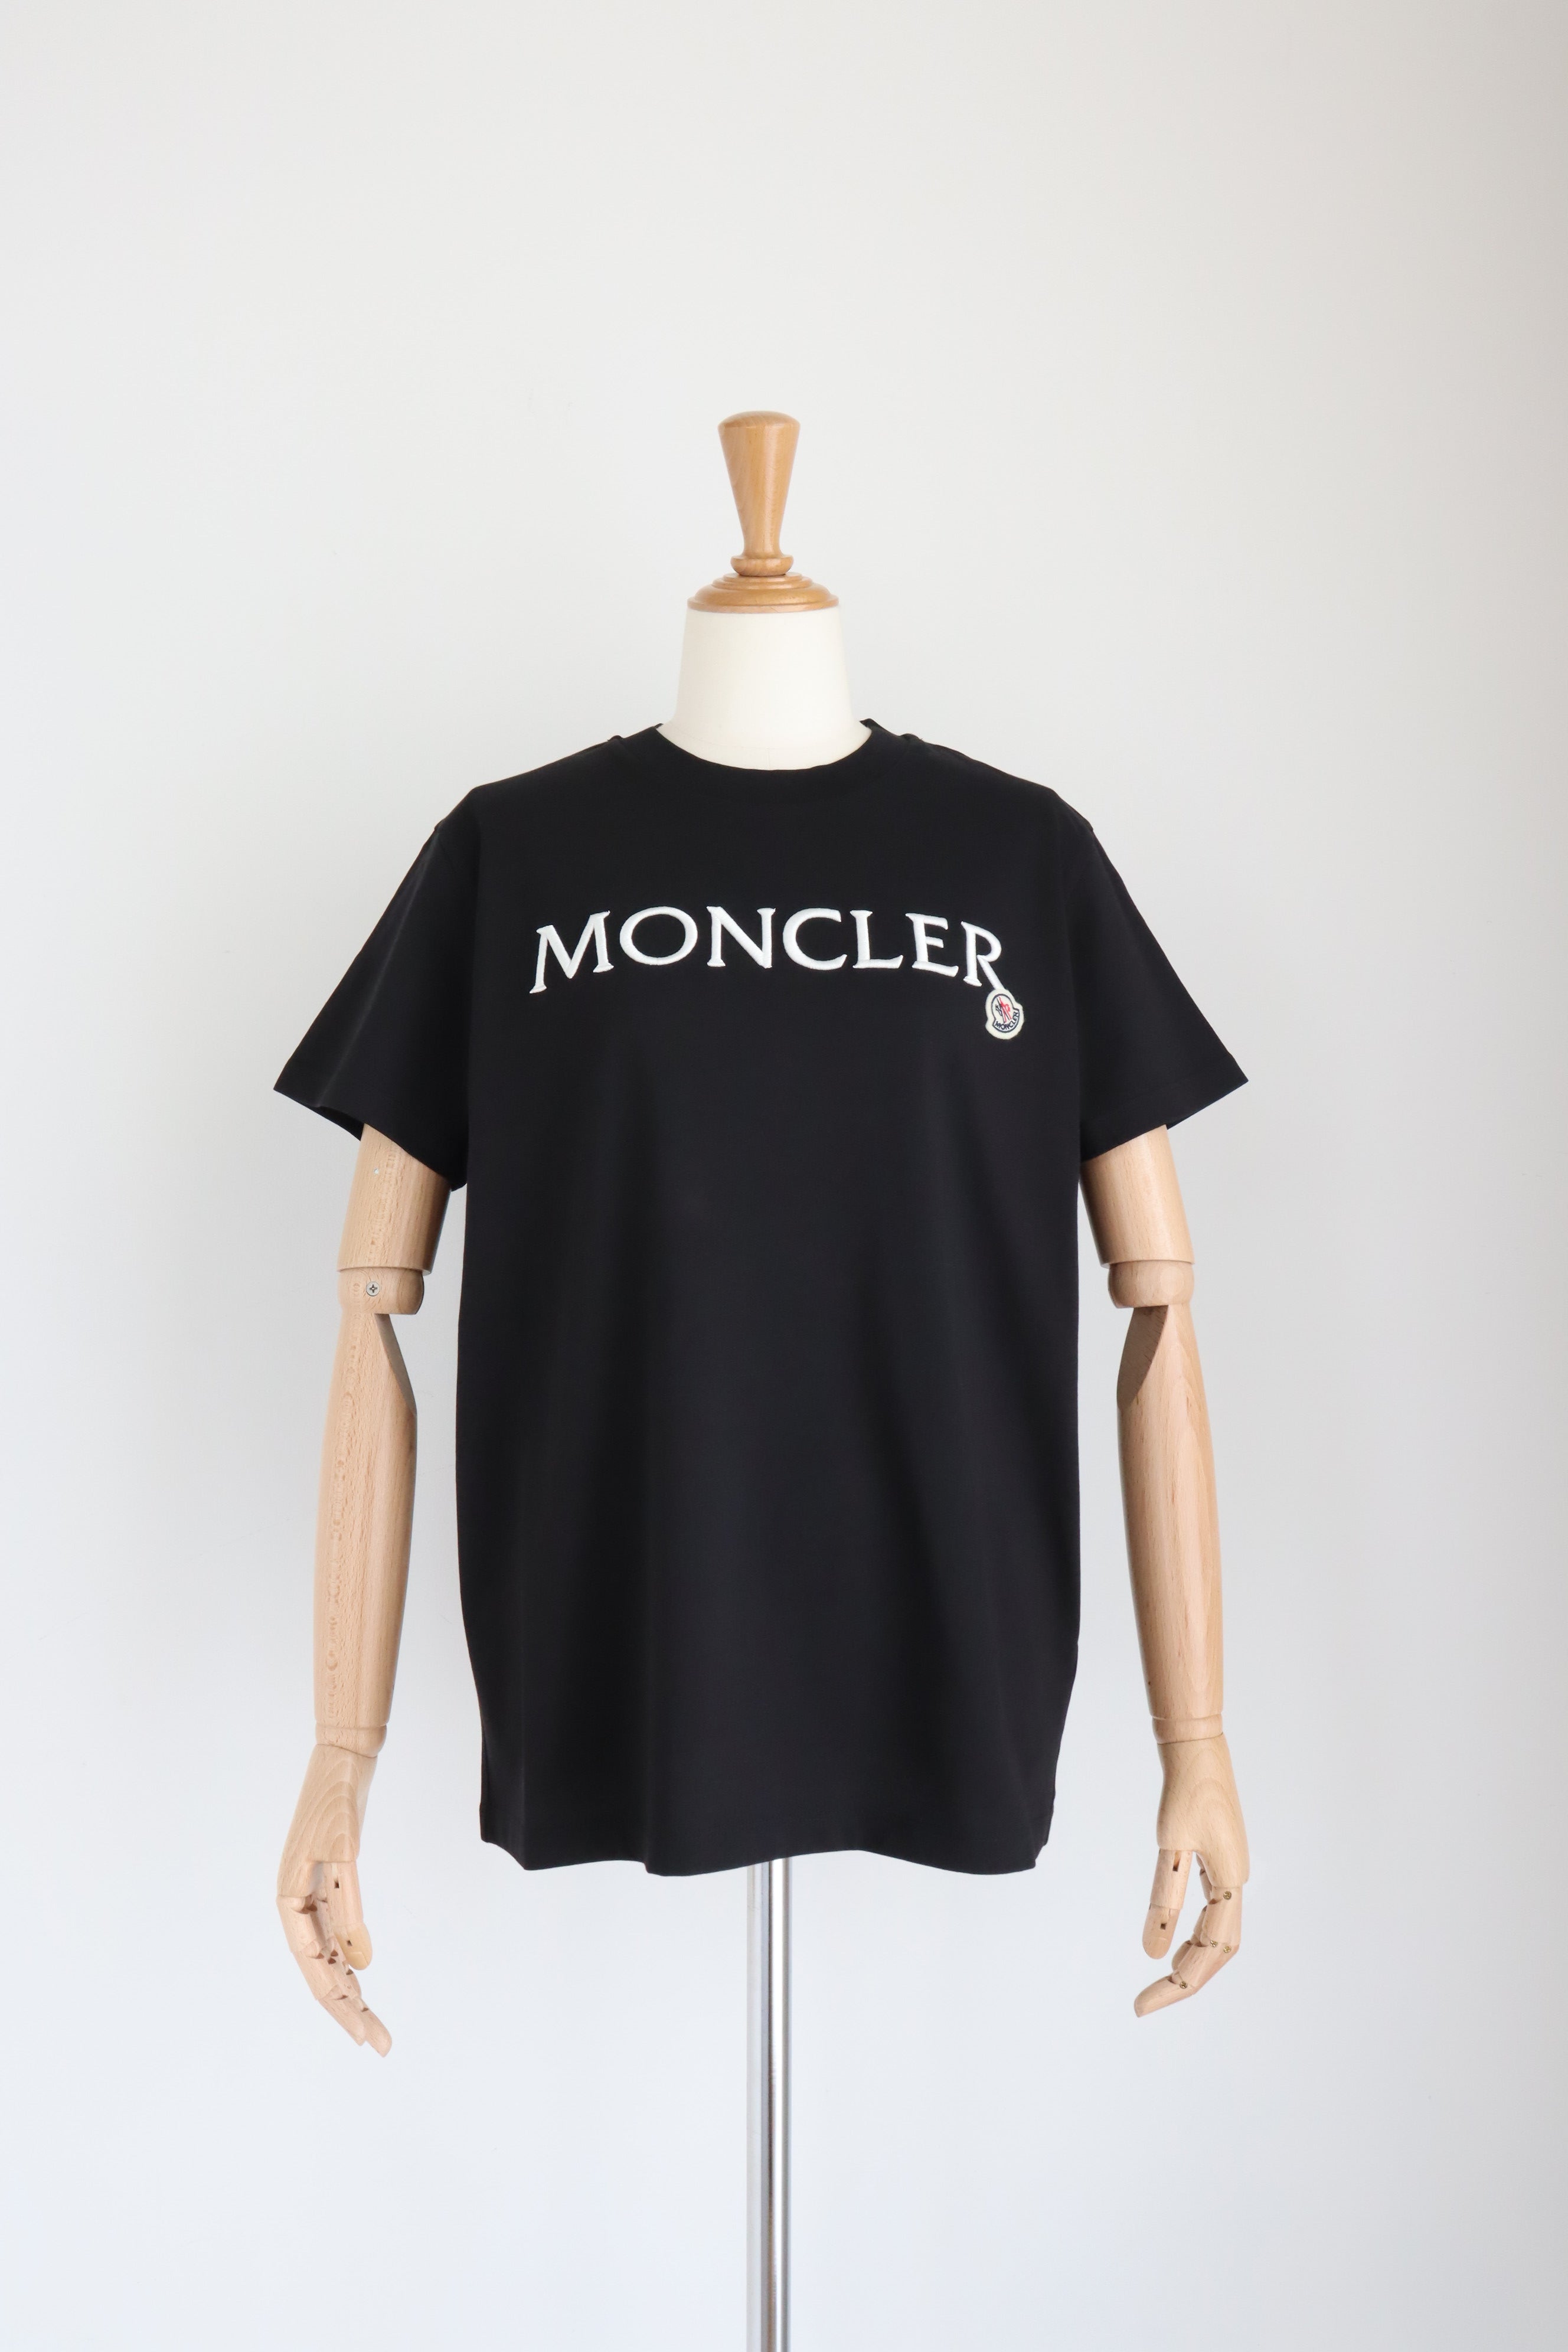 MONCLER – Girlish